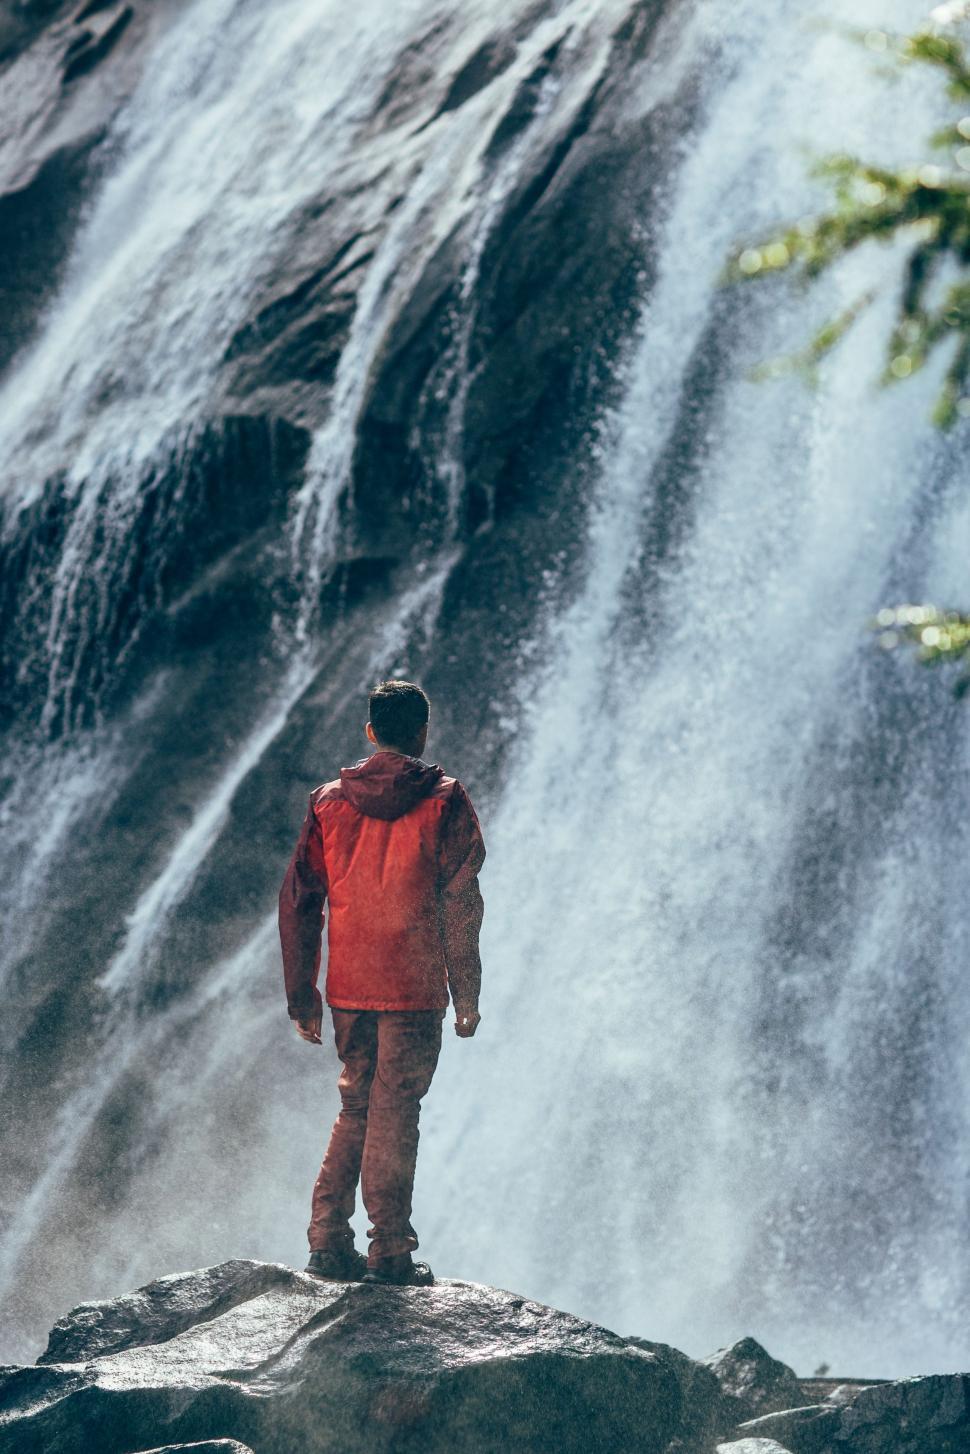 Free Image of Man Standing Near Waterfall 